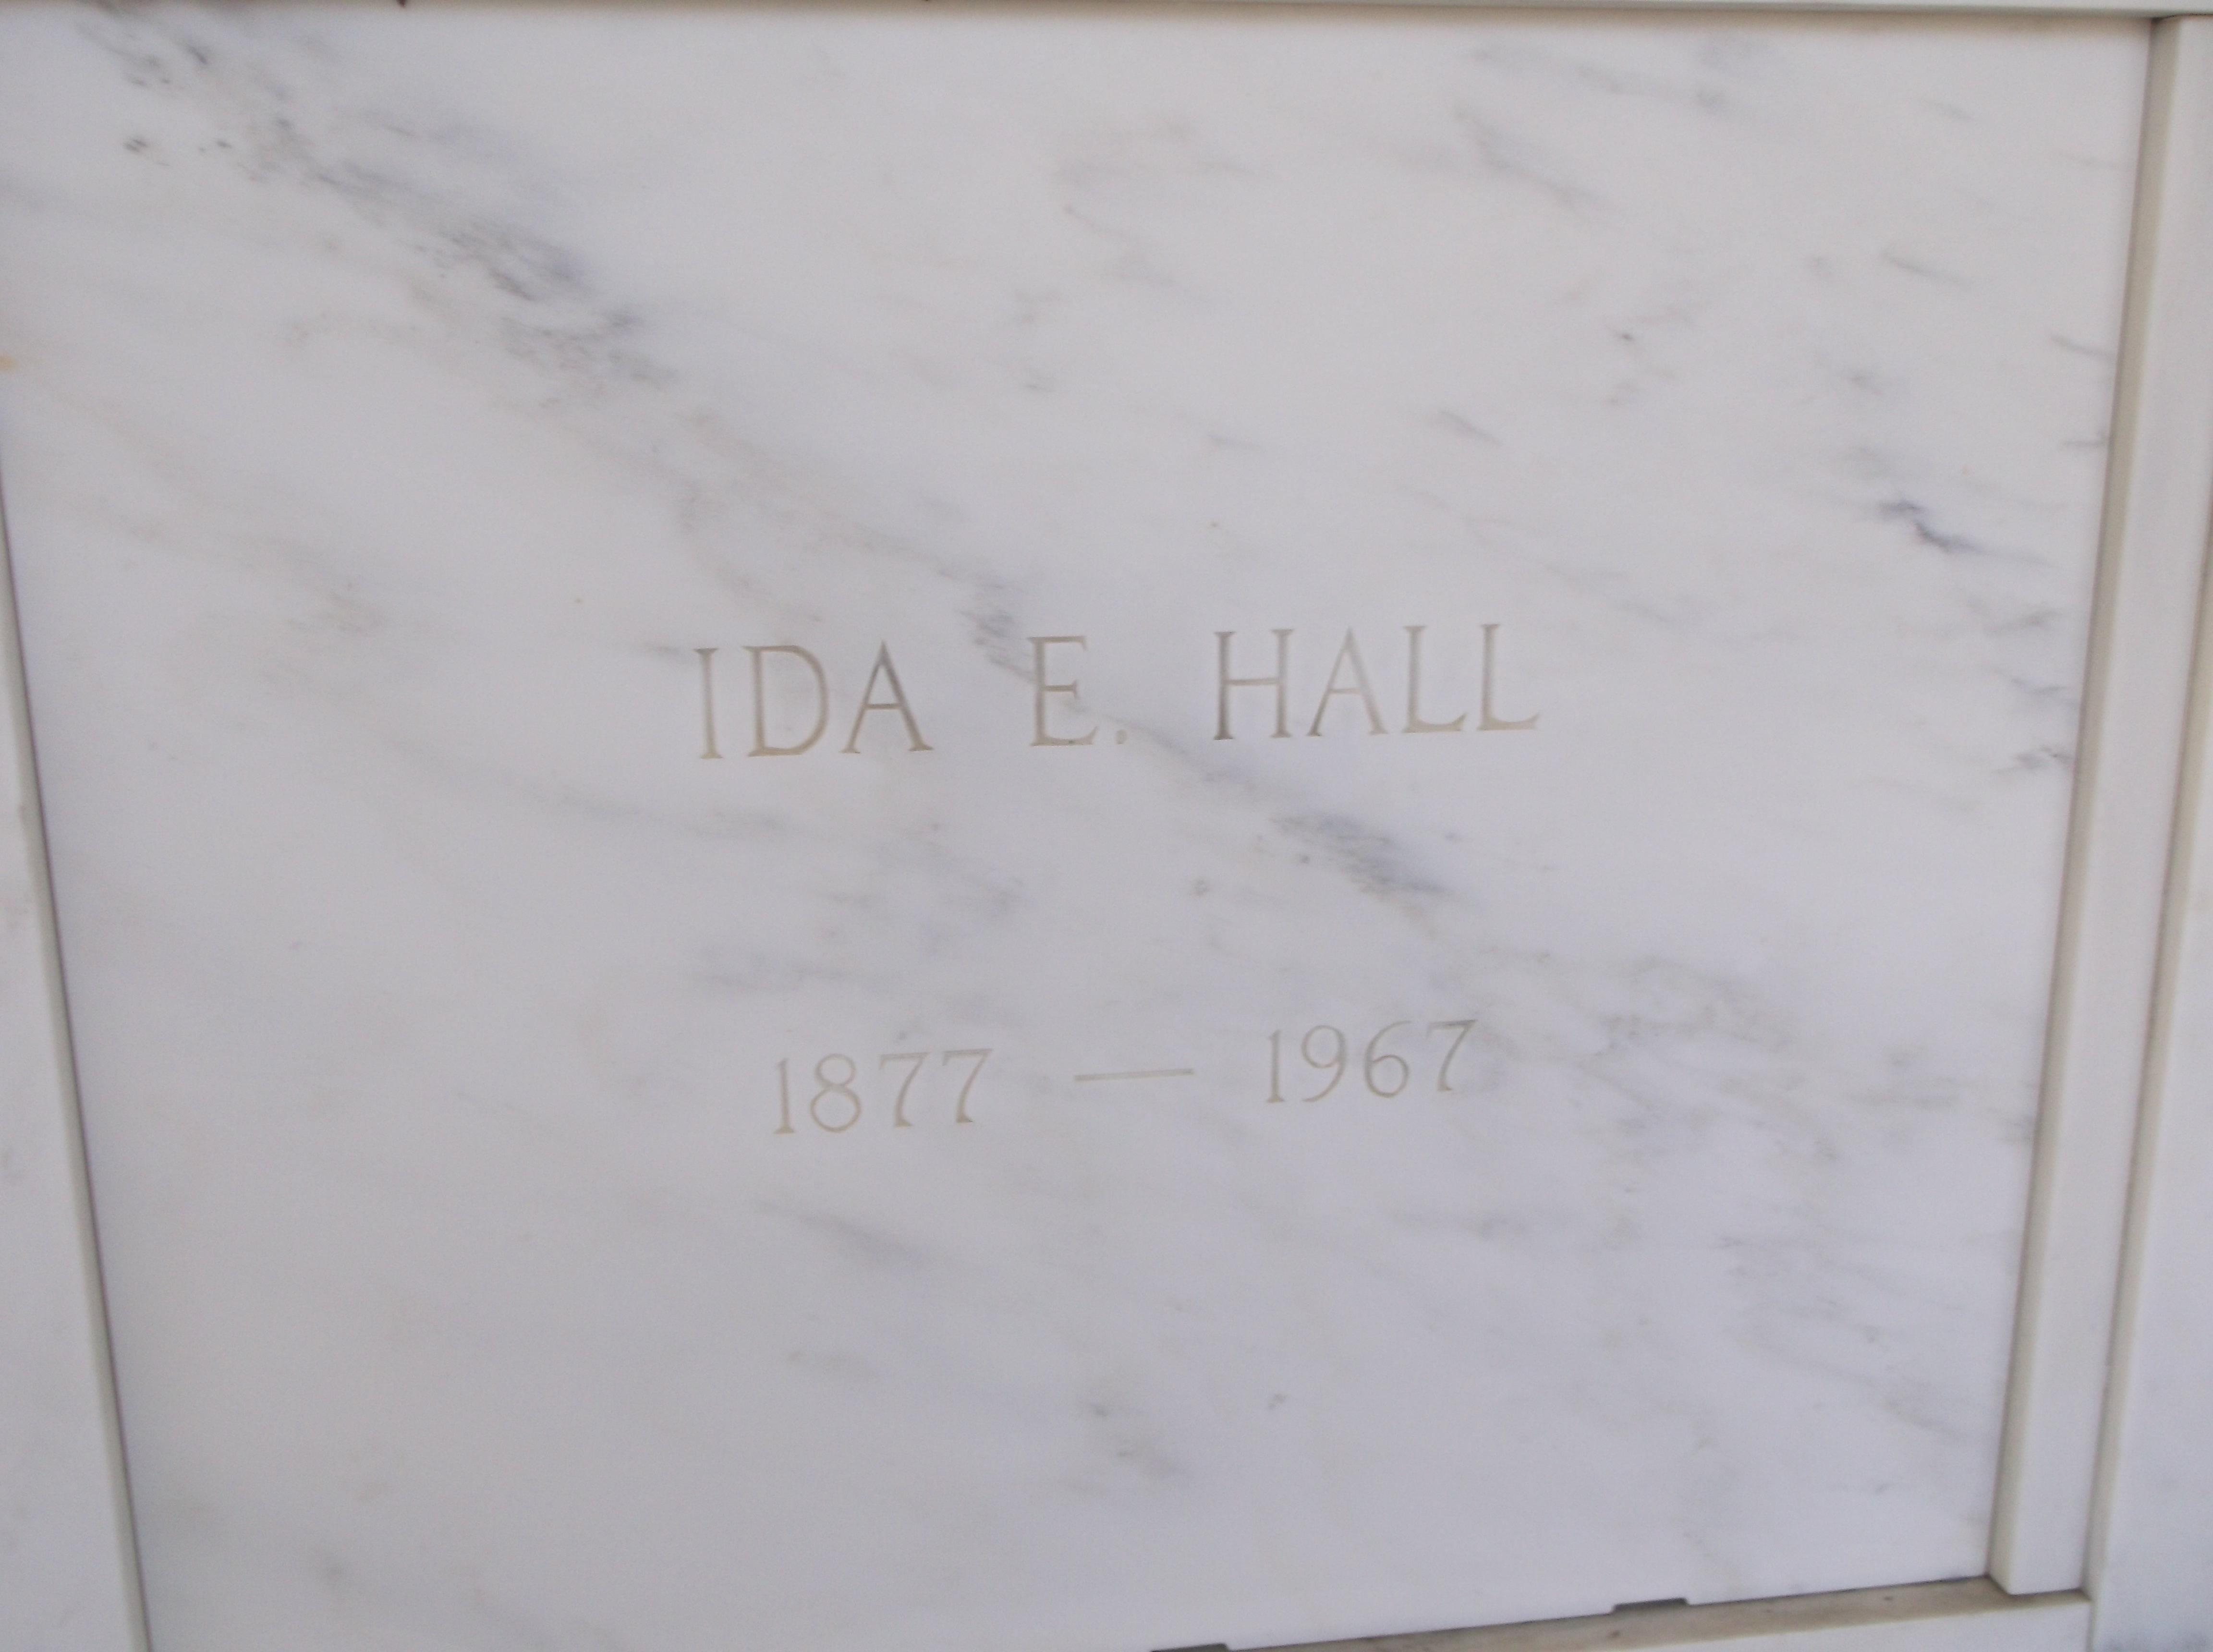 Ida E Hall